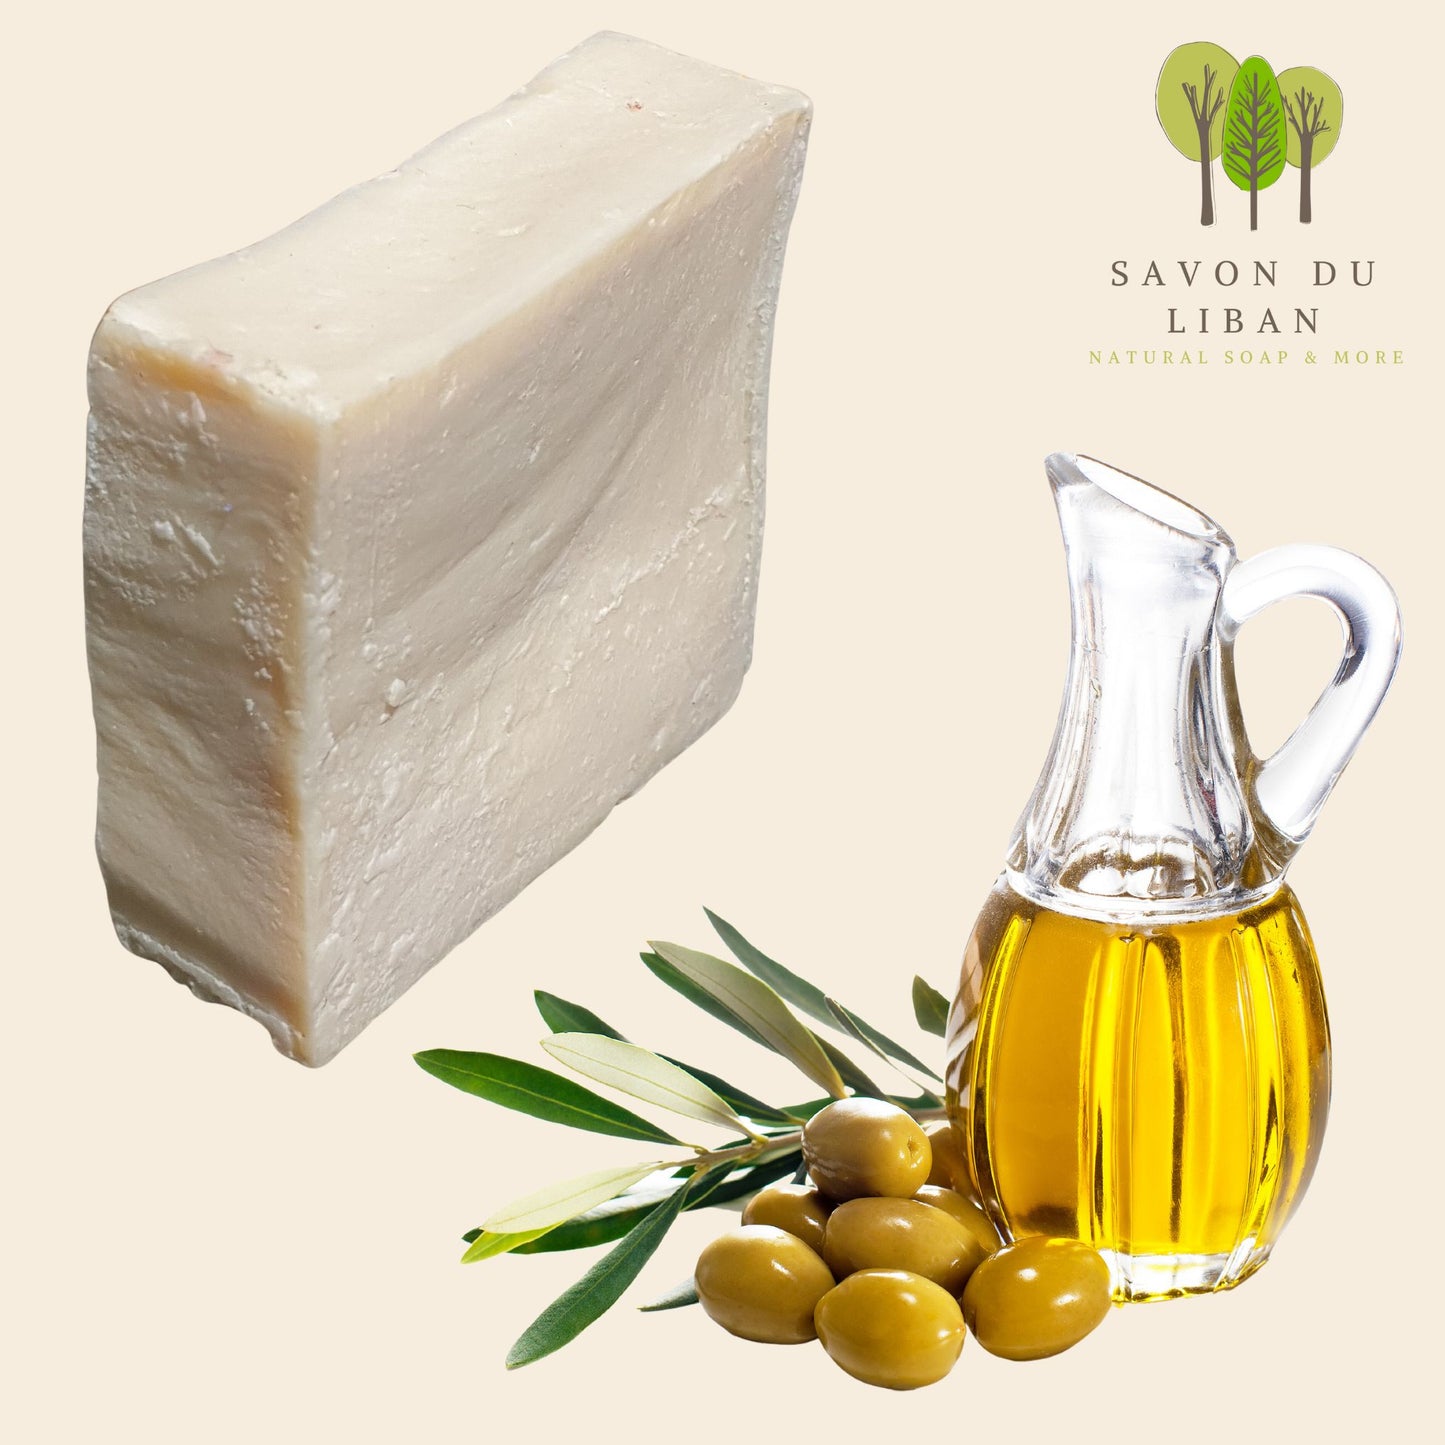 Traditional Natural Olive Oil Soap Bars "Baladi" from Lebanon